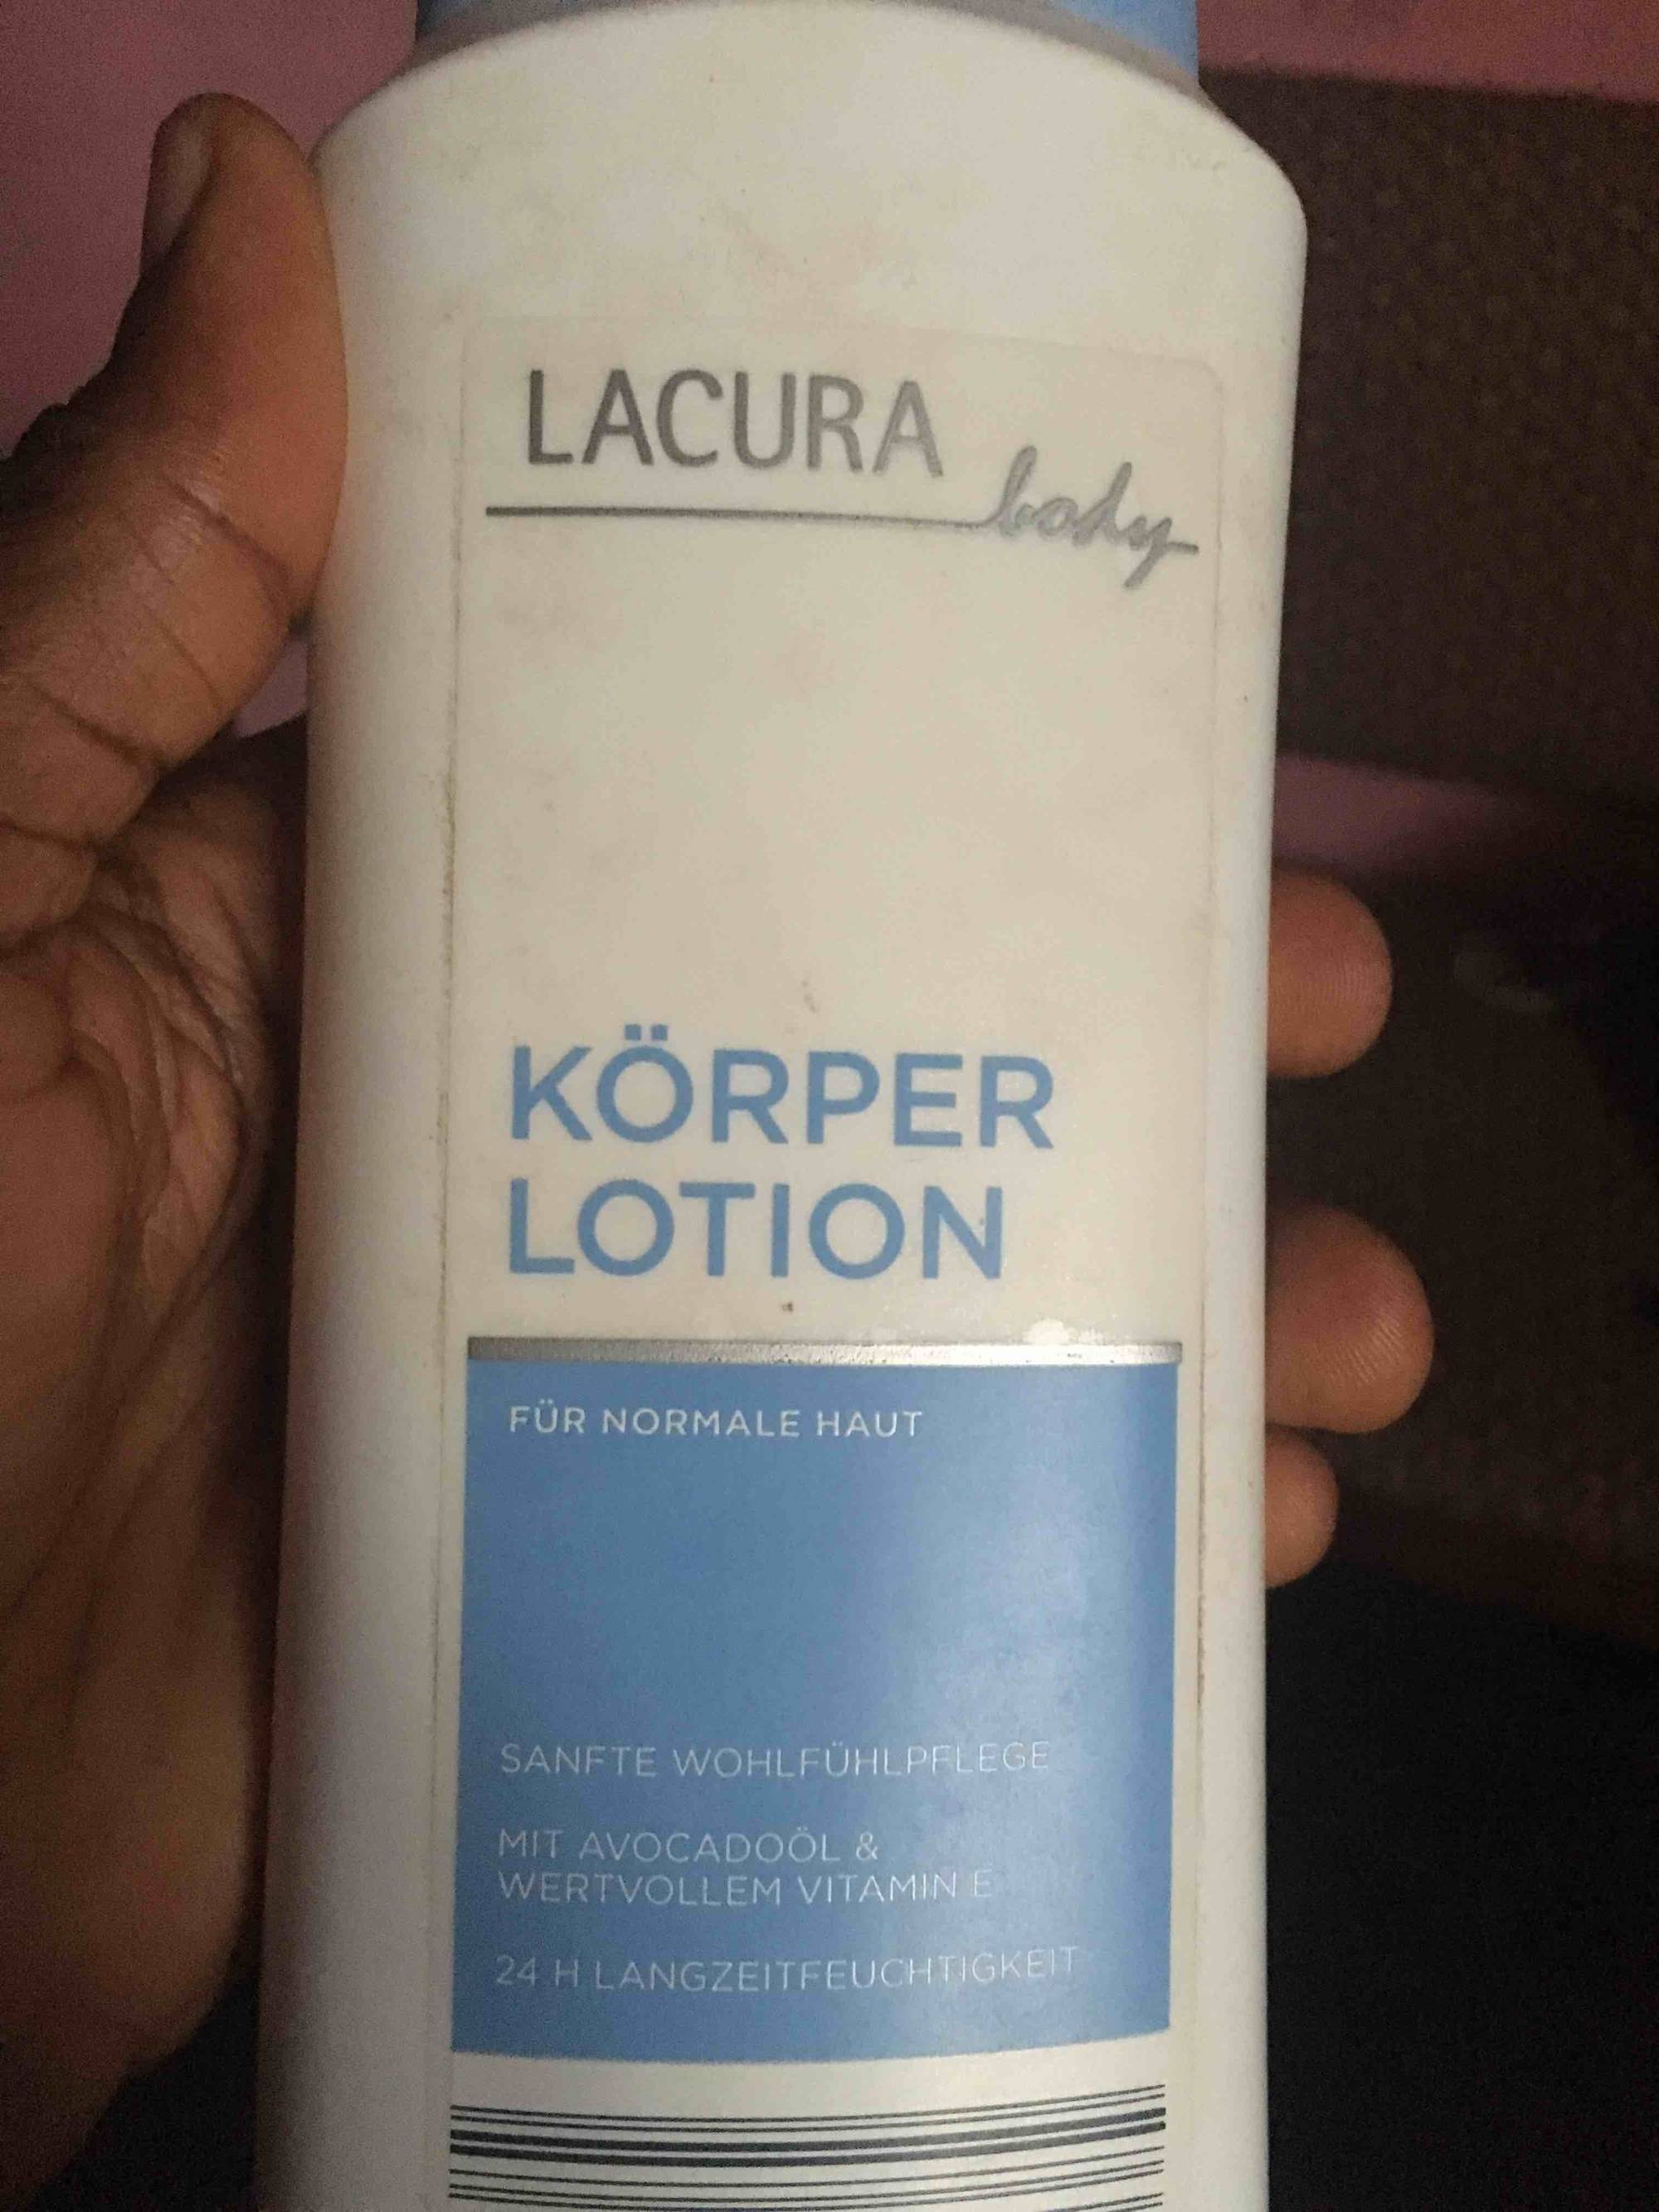 LACURA - Body - Körper lotion